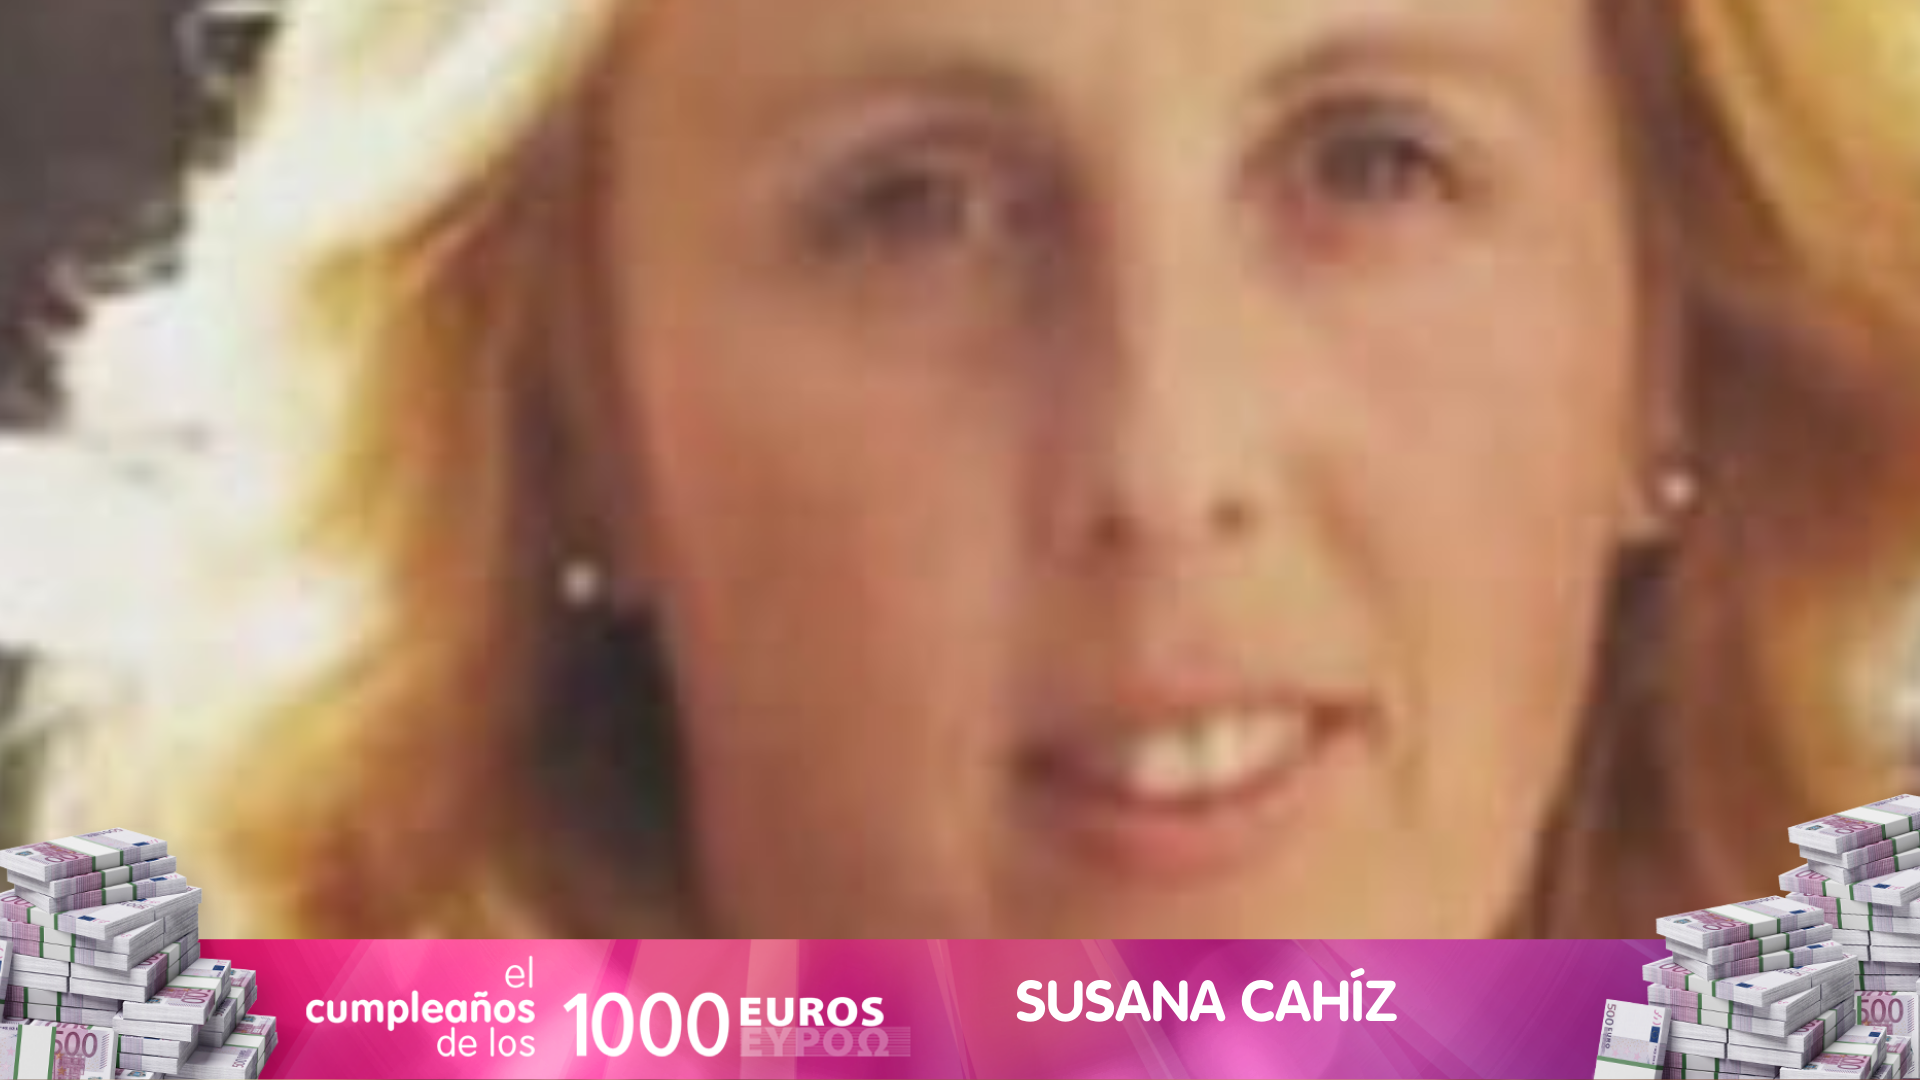 Susana gana 1.000 euros: "¡Es real! ¡Que confíen porque toca!"